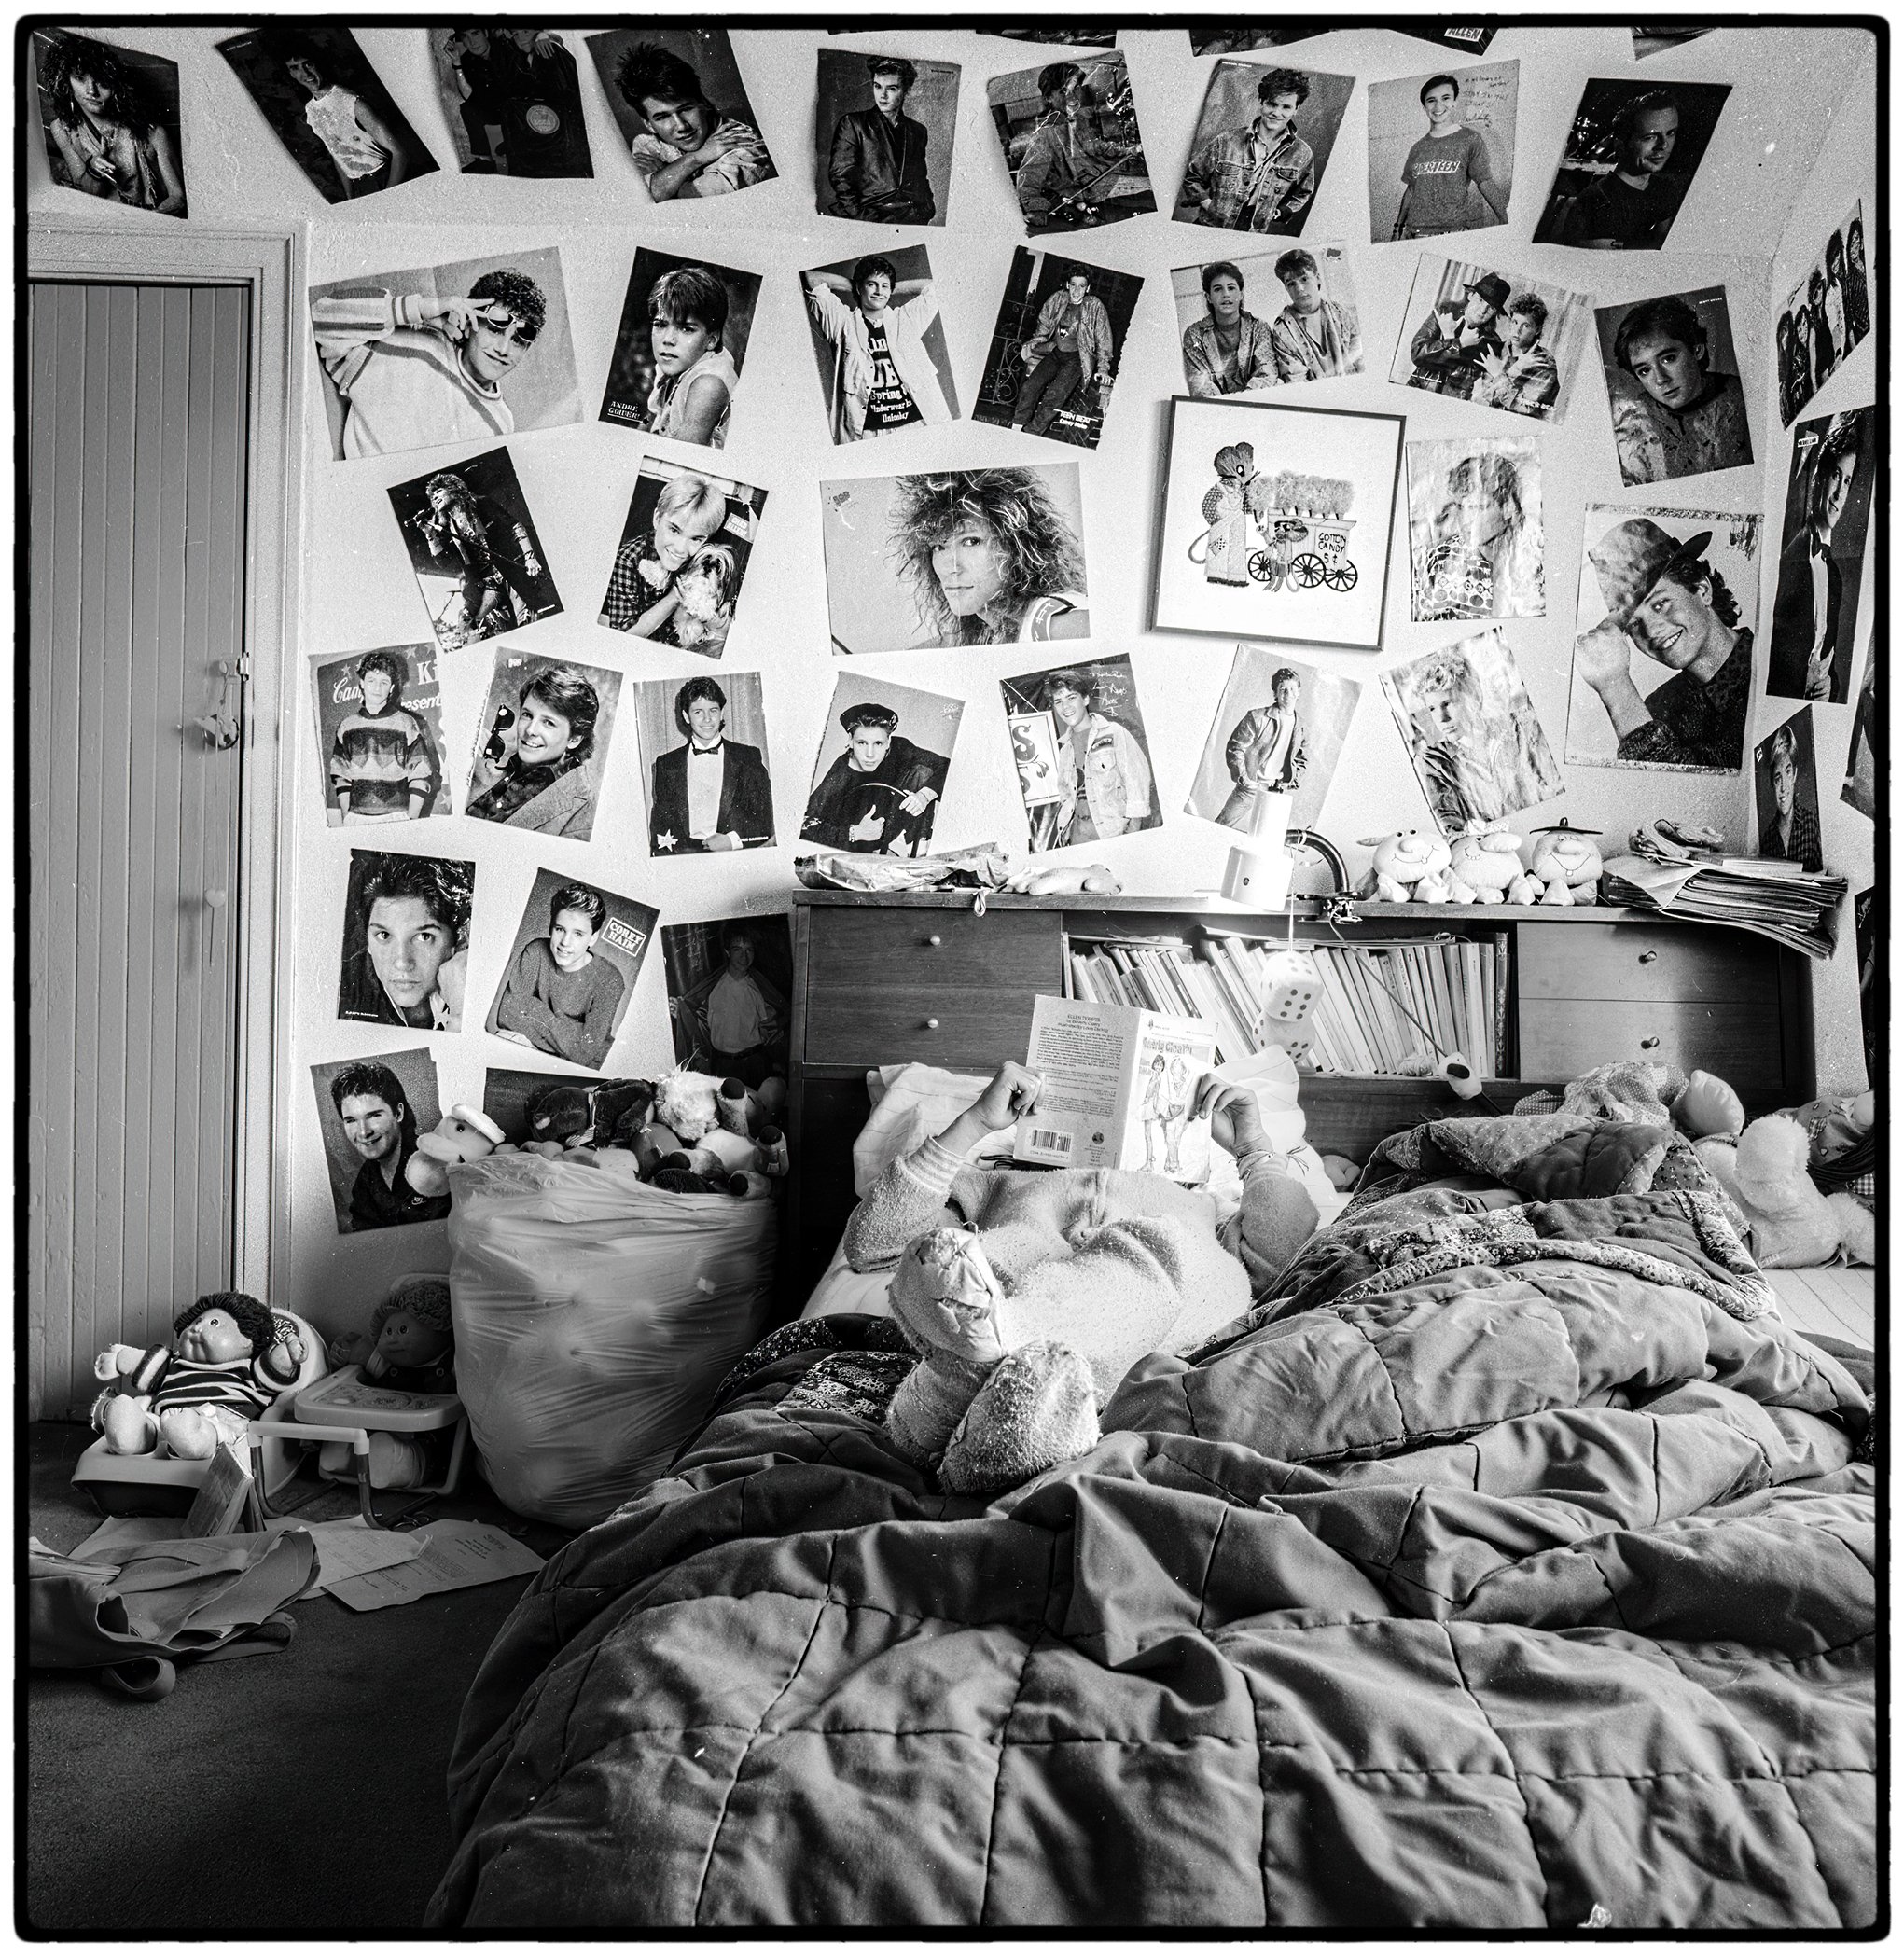 Jennifer's room